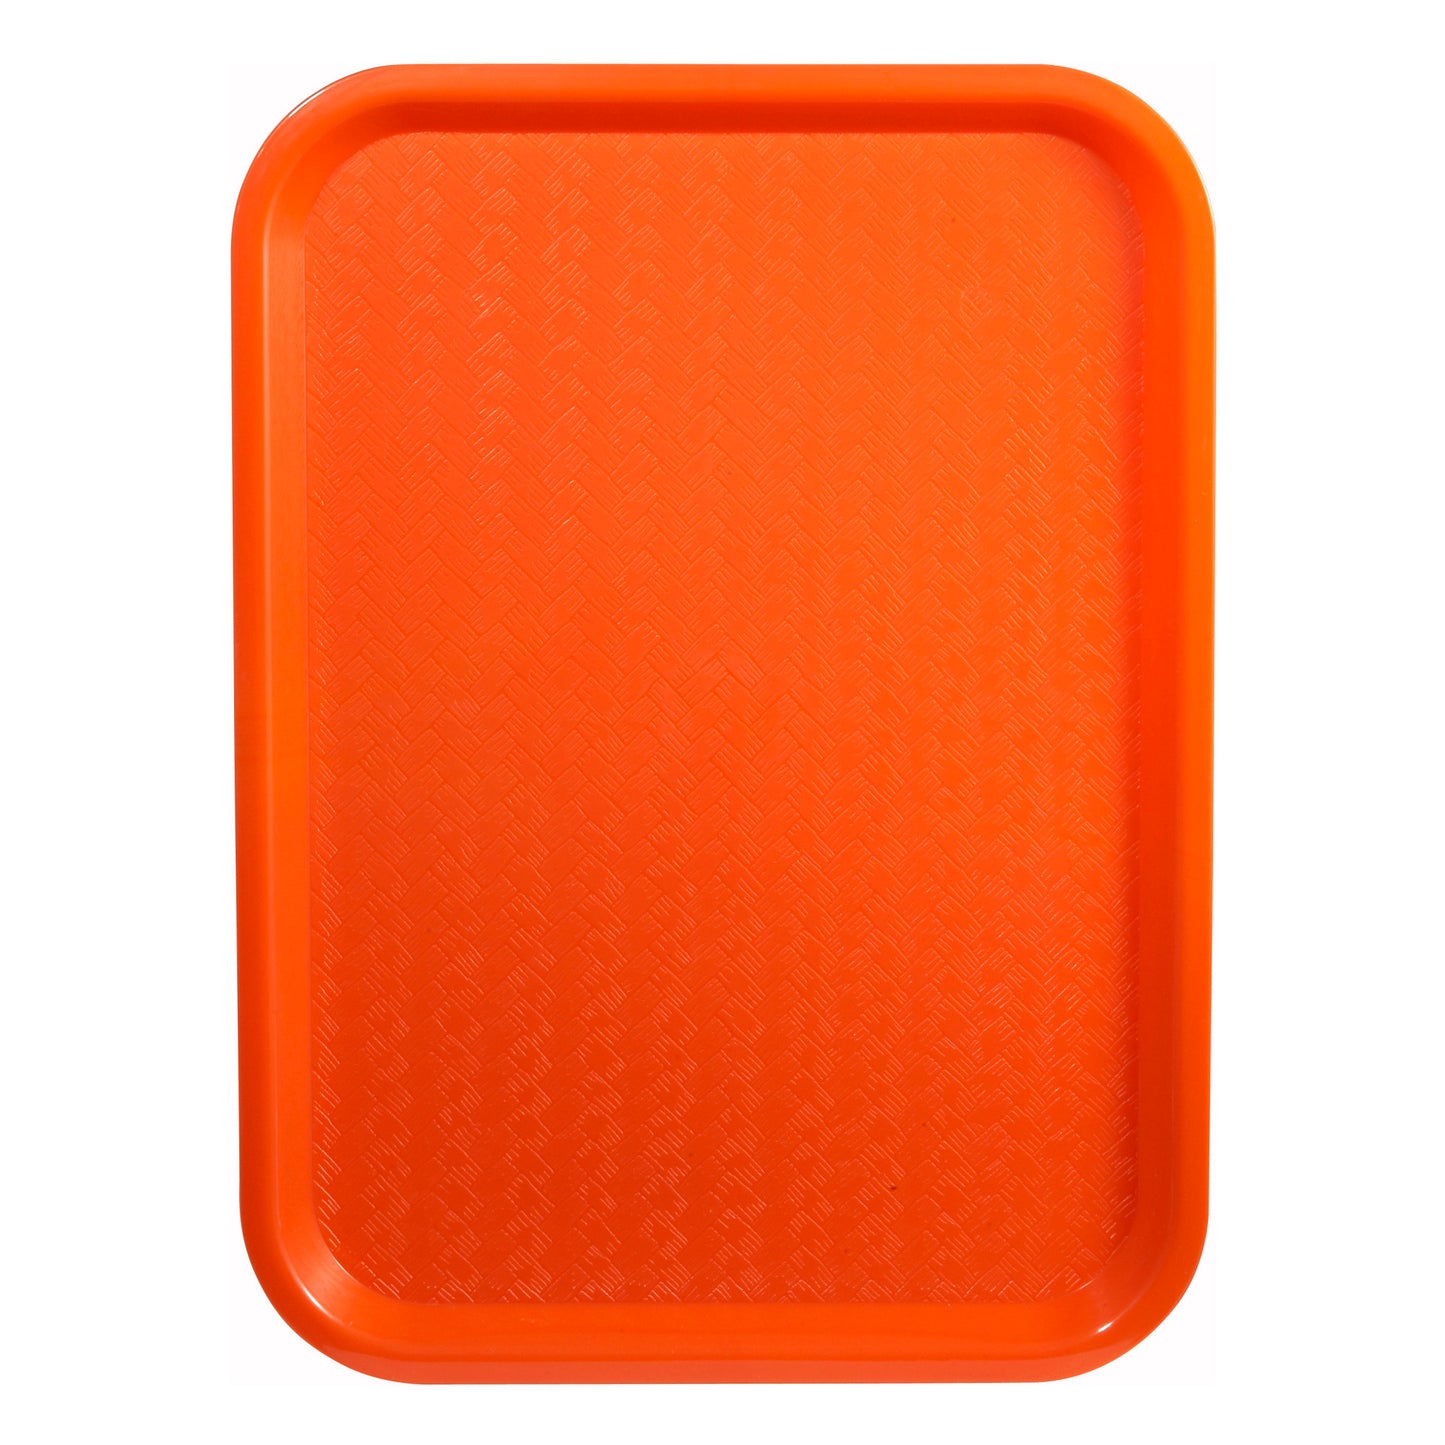 High Quality Plastic Cafeteria Tray - 14 x 18, Orange